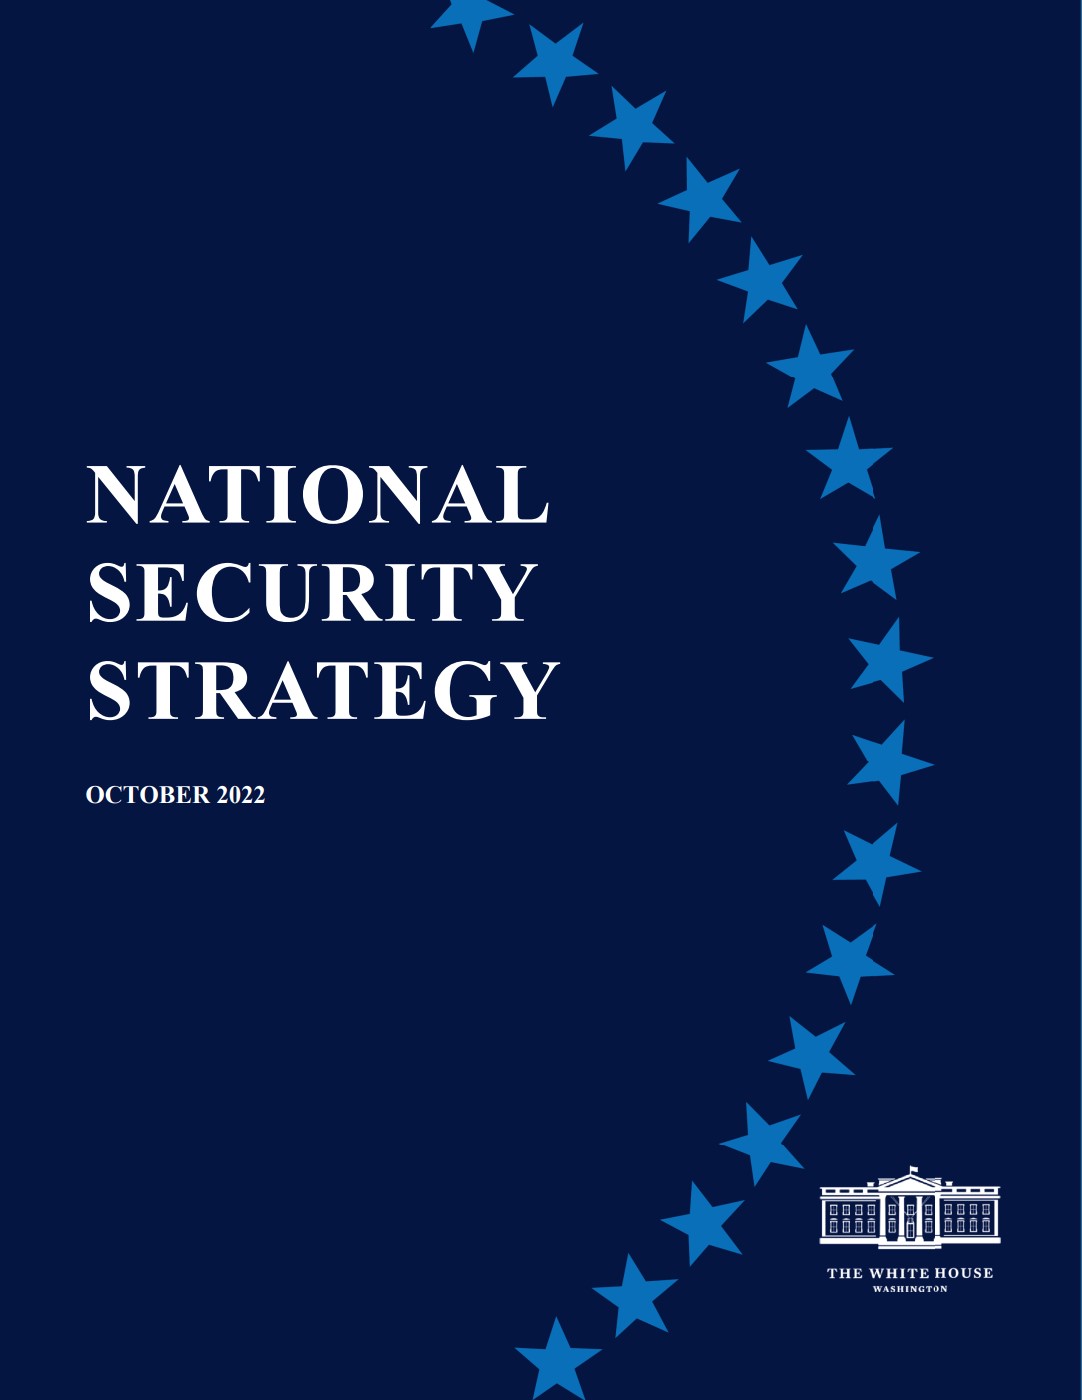 BidenHarris Administrations National Security Strategy NWCF